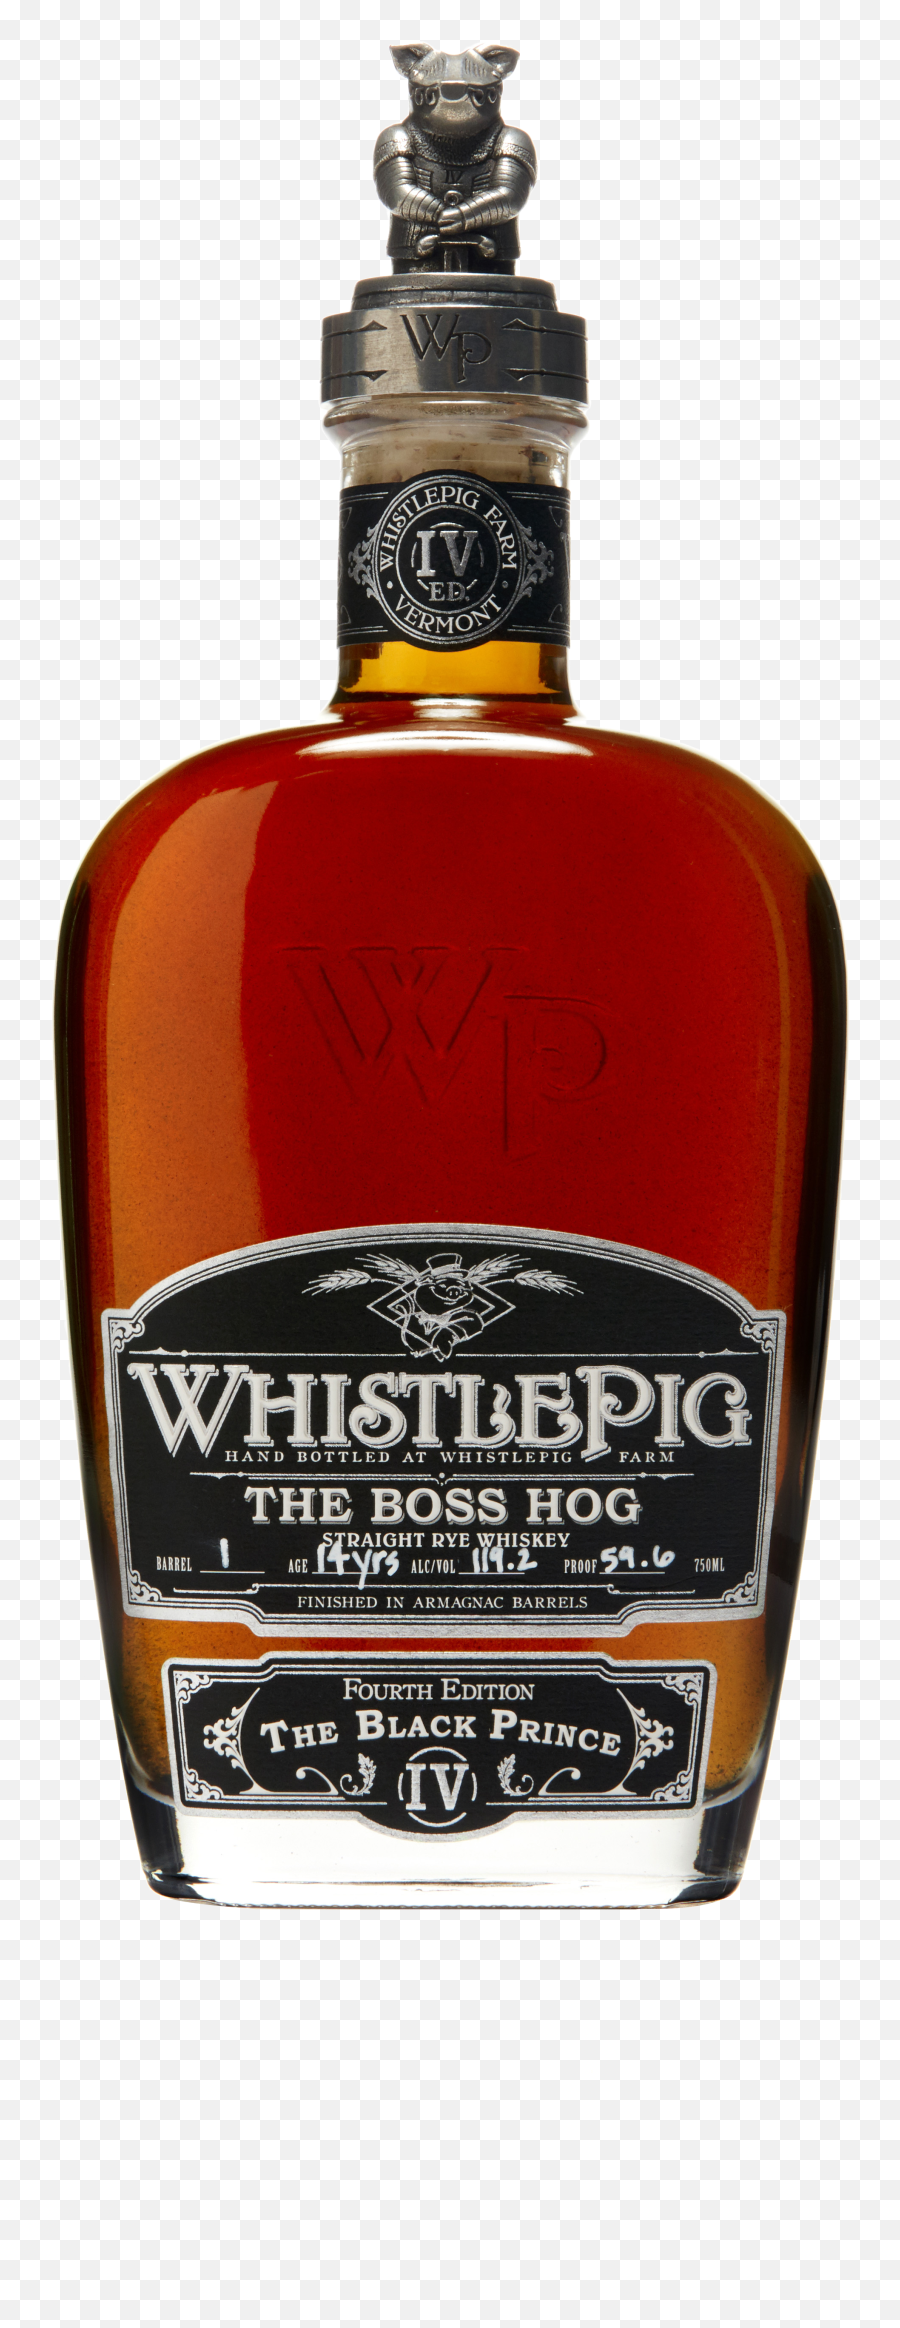 Bhiv Transparent Bottle Shot Image - Whistlepig Vermont Whistlepig The Boss Hog Png,Whiskey Bottle Png